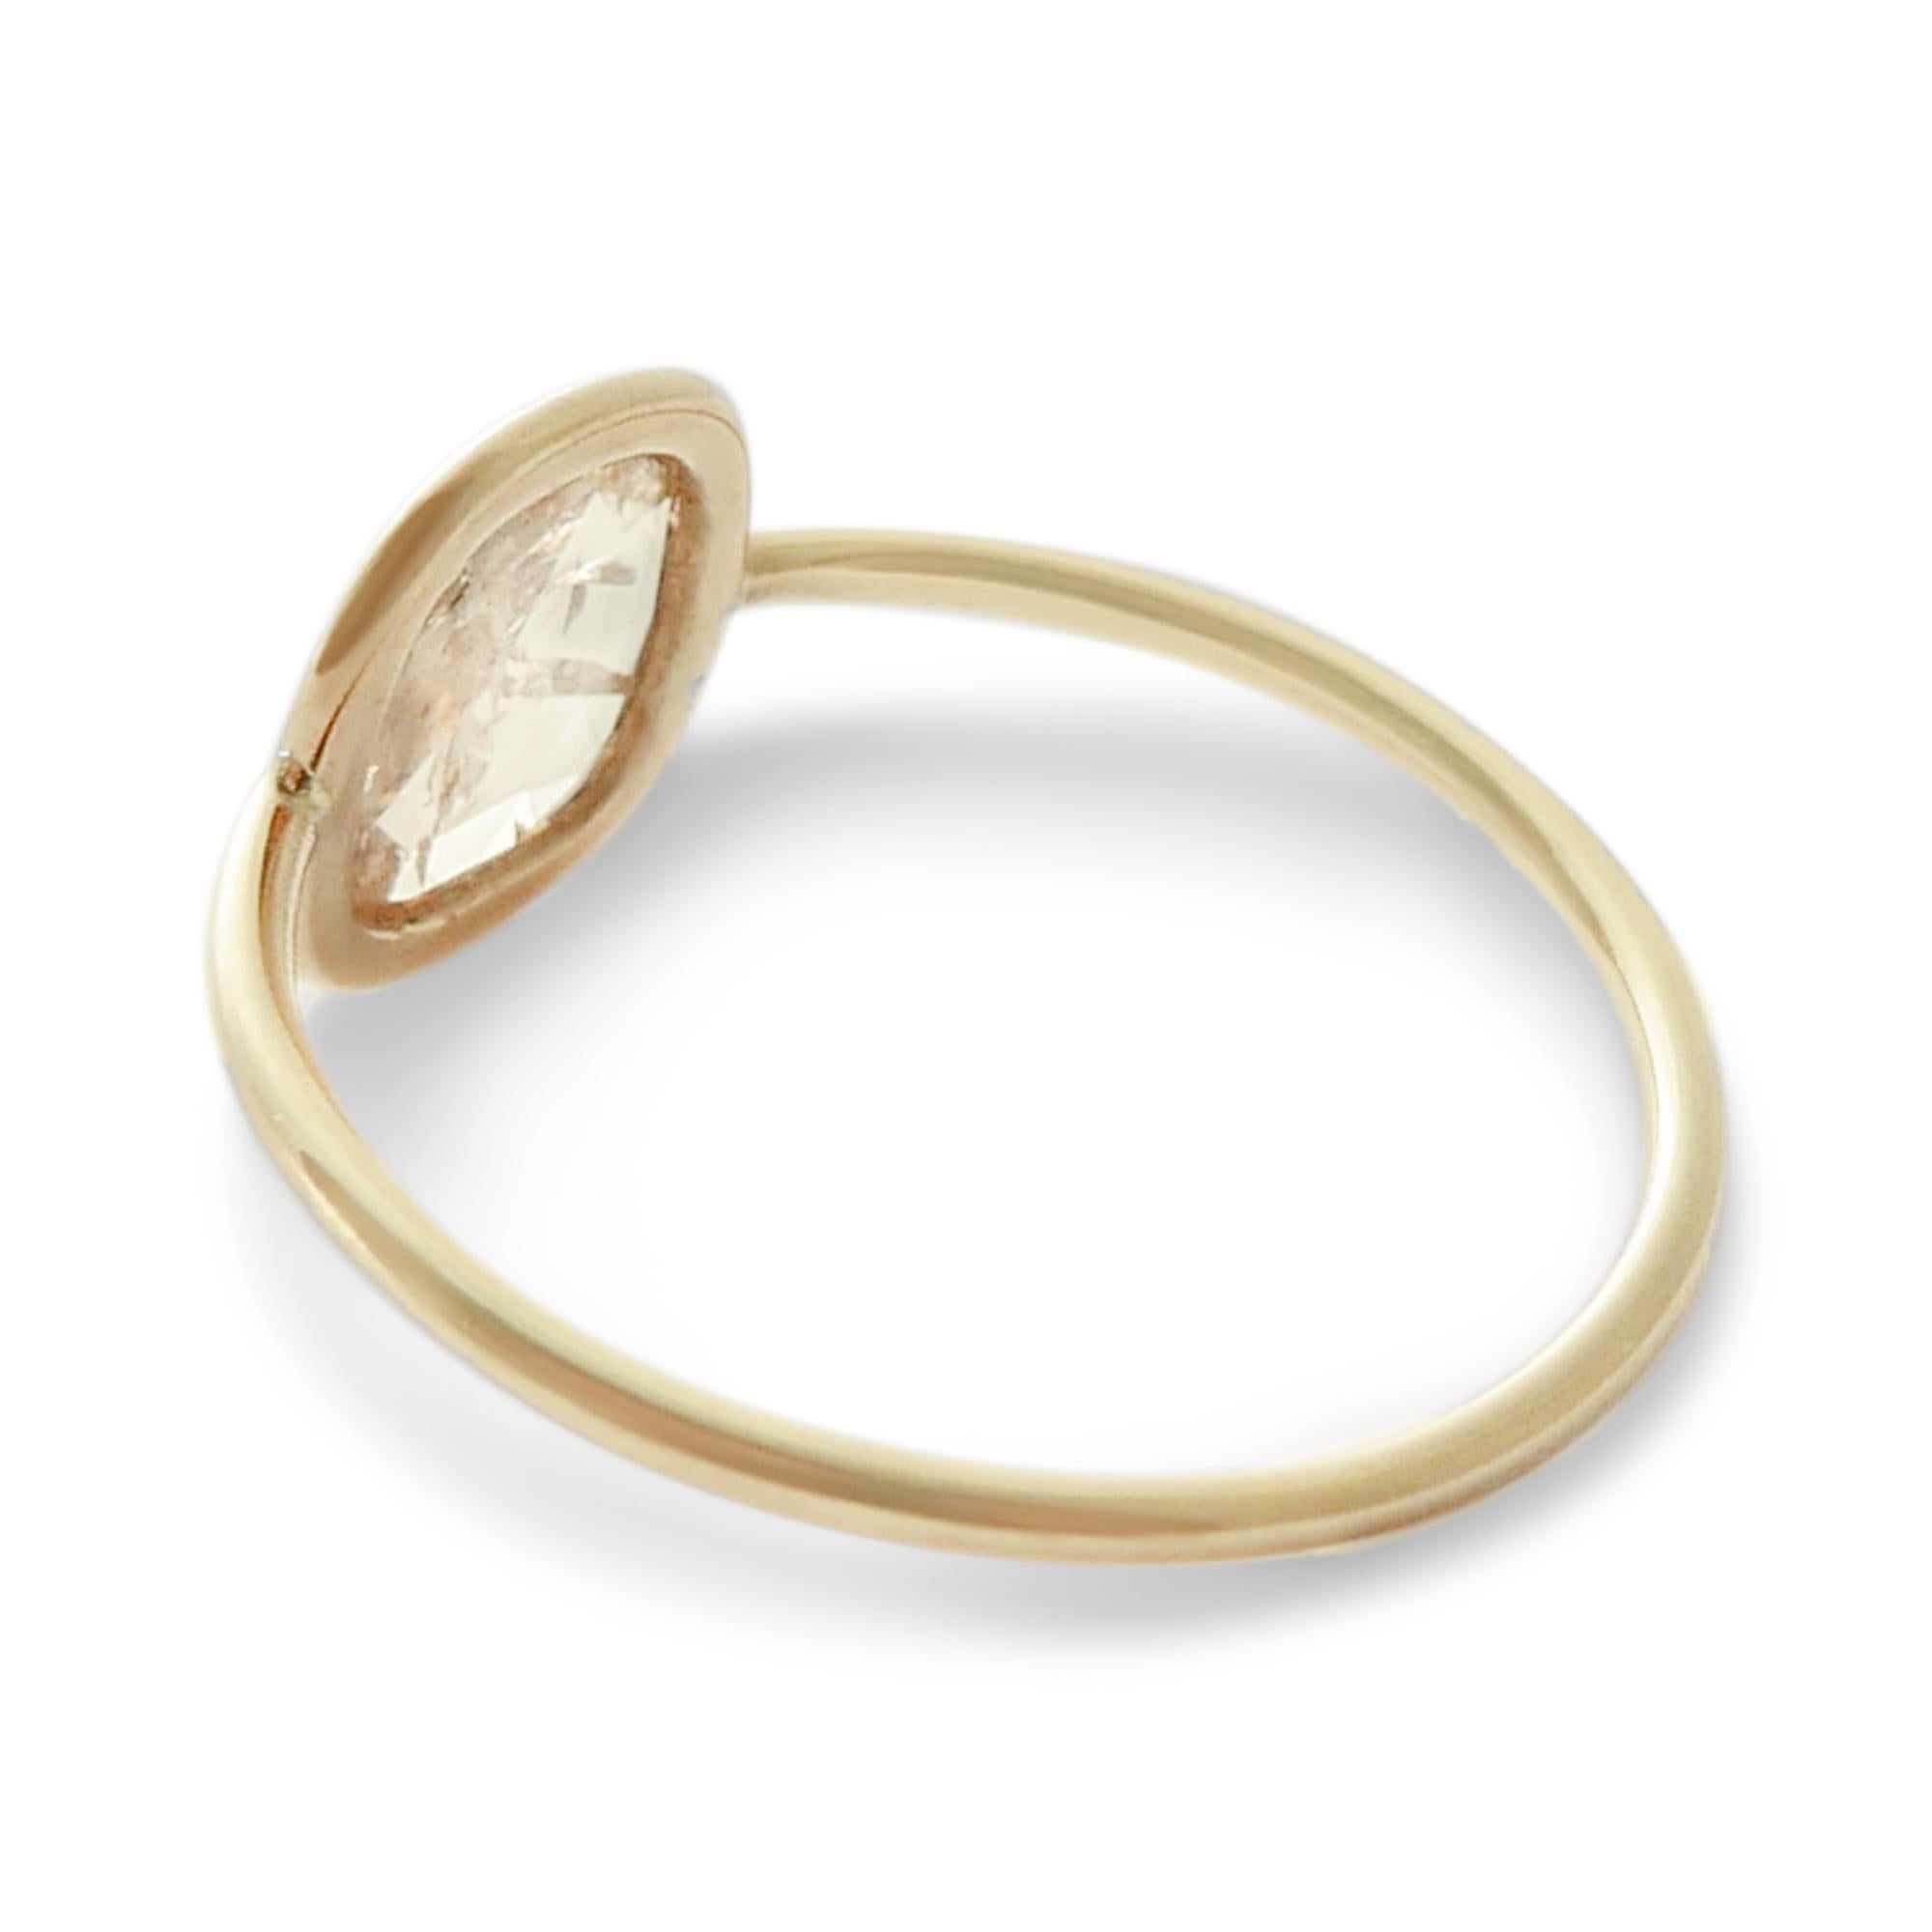 Rose Cut Diamond Slice Ring in 18 Karat Gold by Allison Bryan